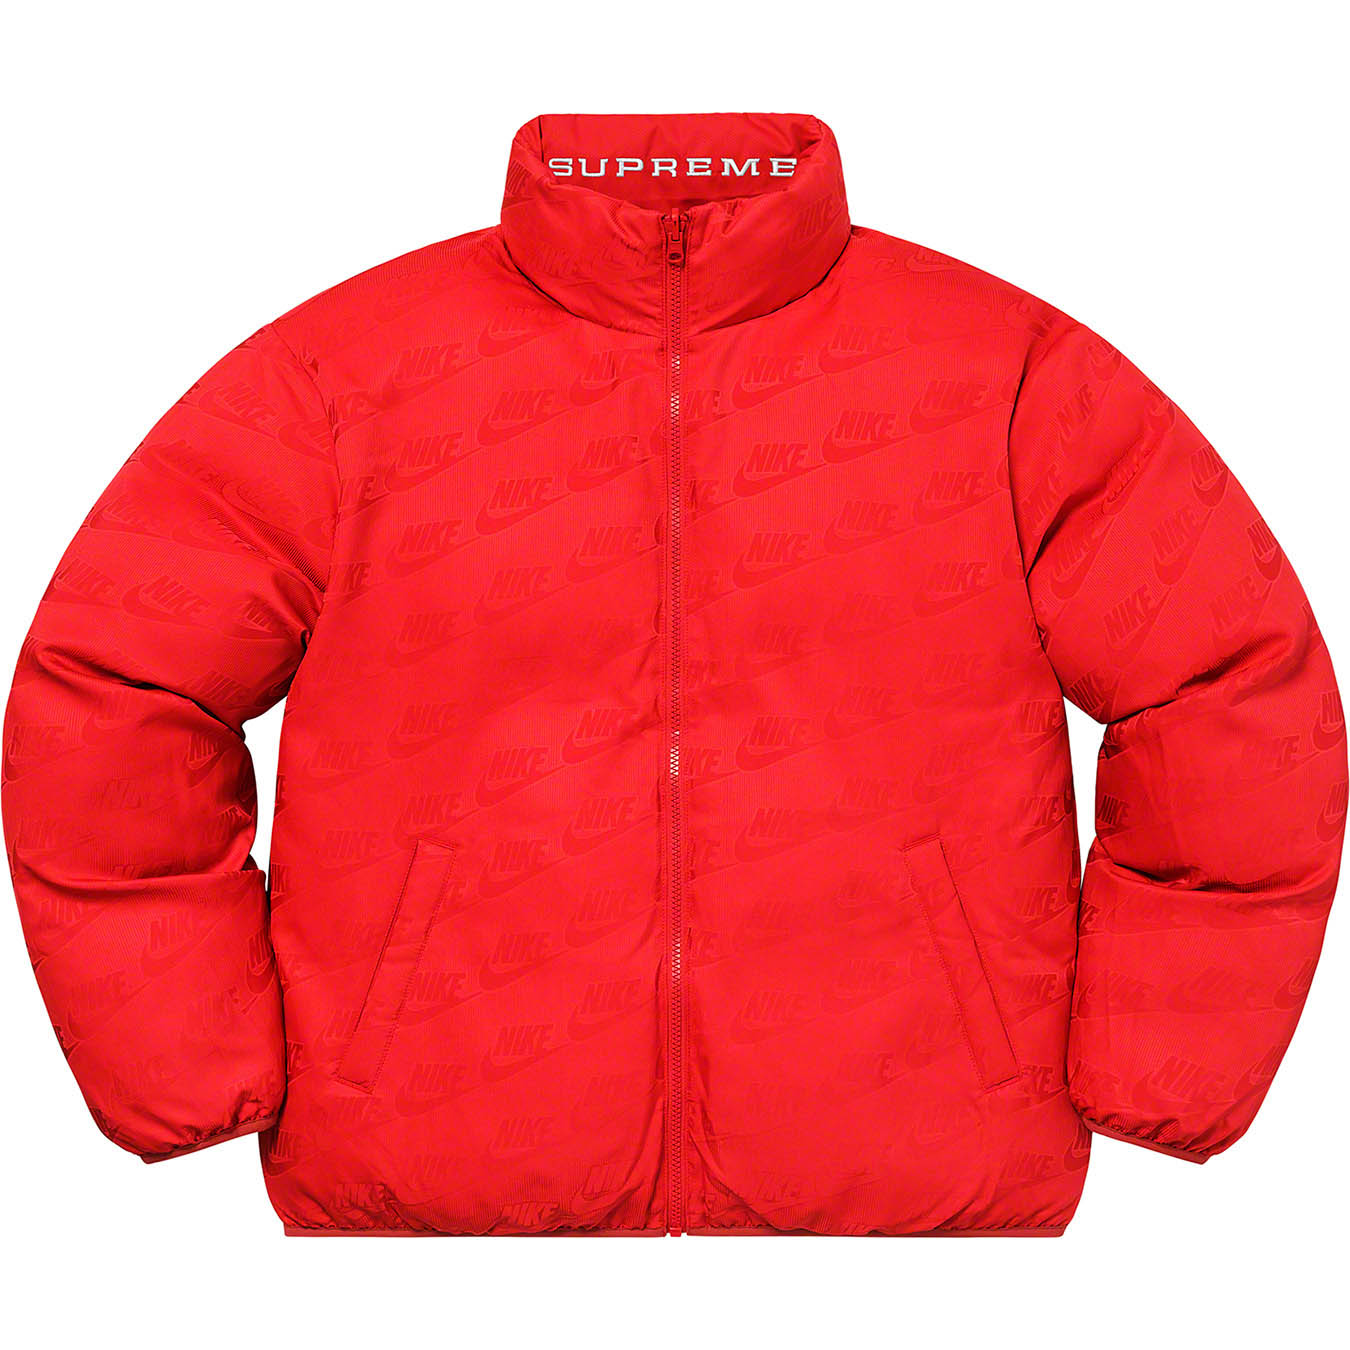 Supreme®/Nike® Reversible Puffy Jacket | Supreme 21ss